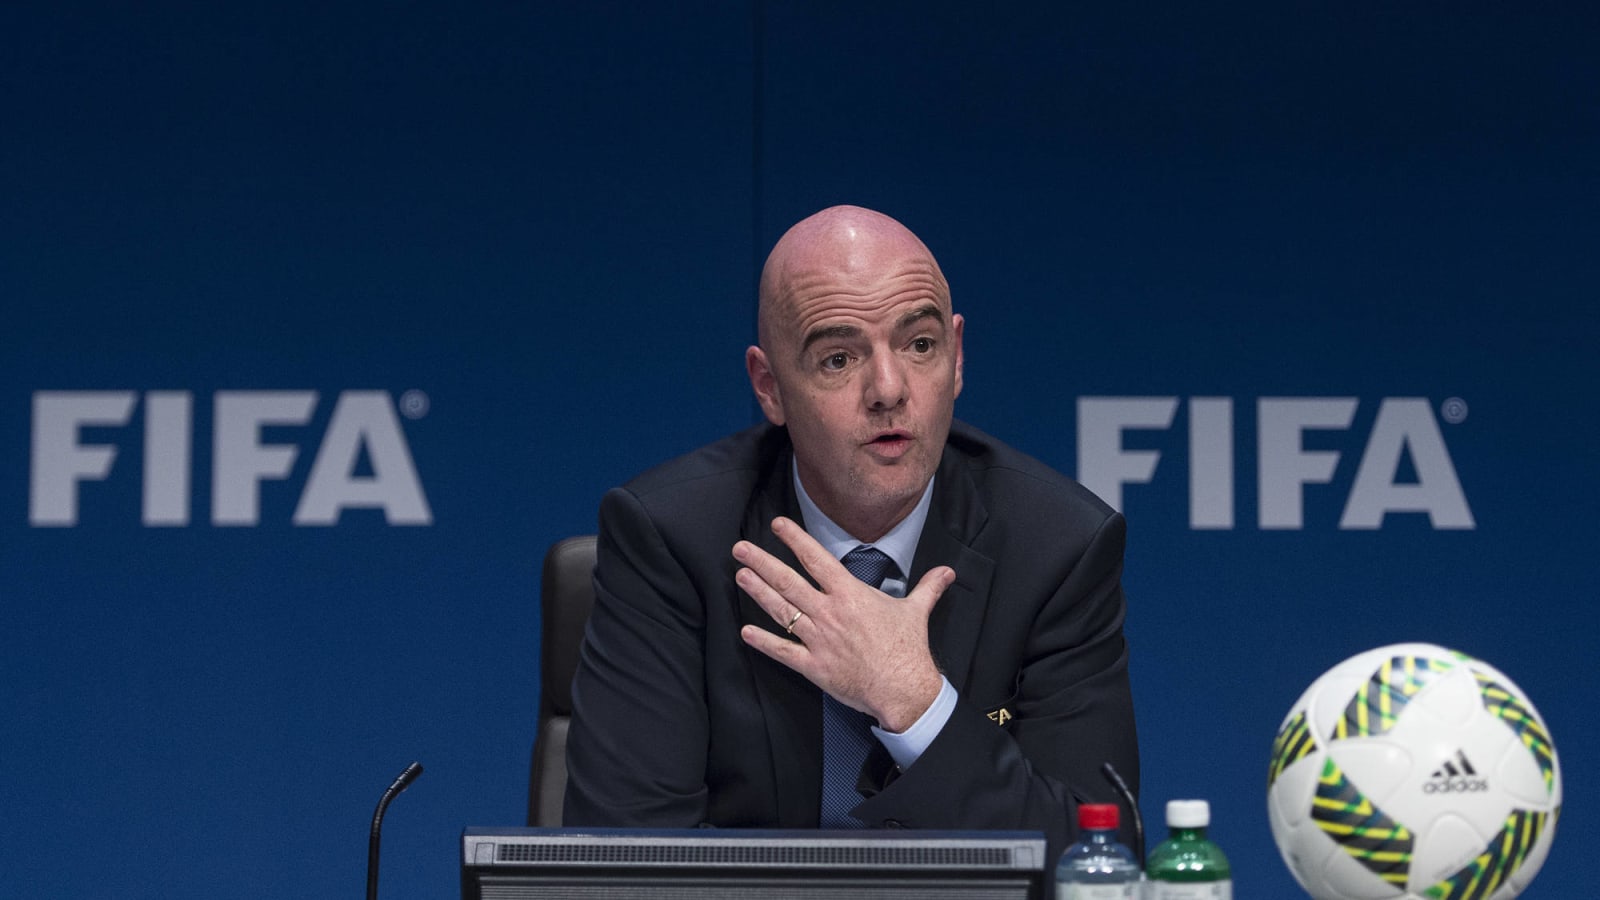 Criminal investigation opened against FIFA President Infantino